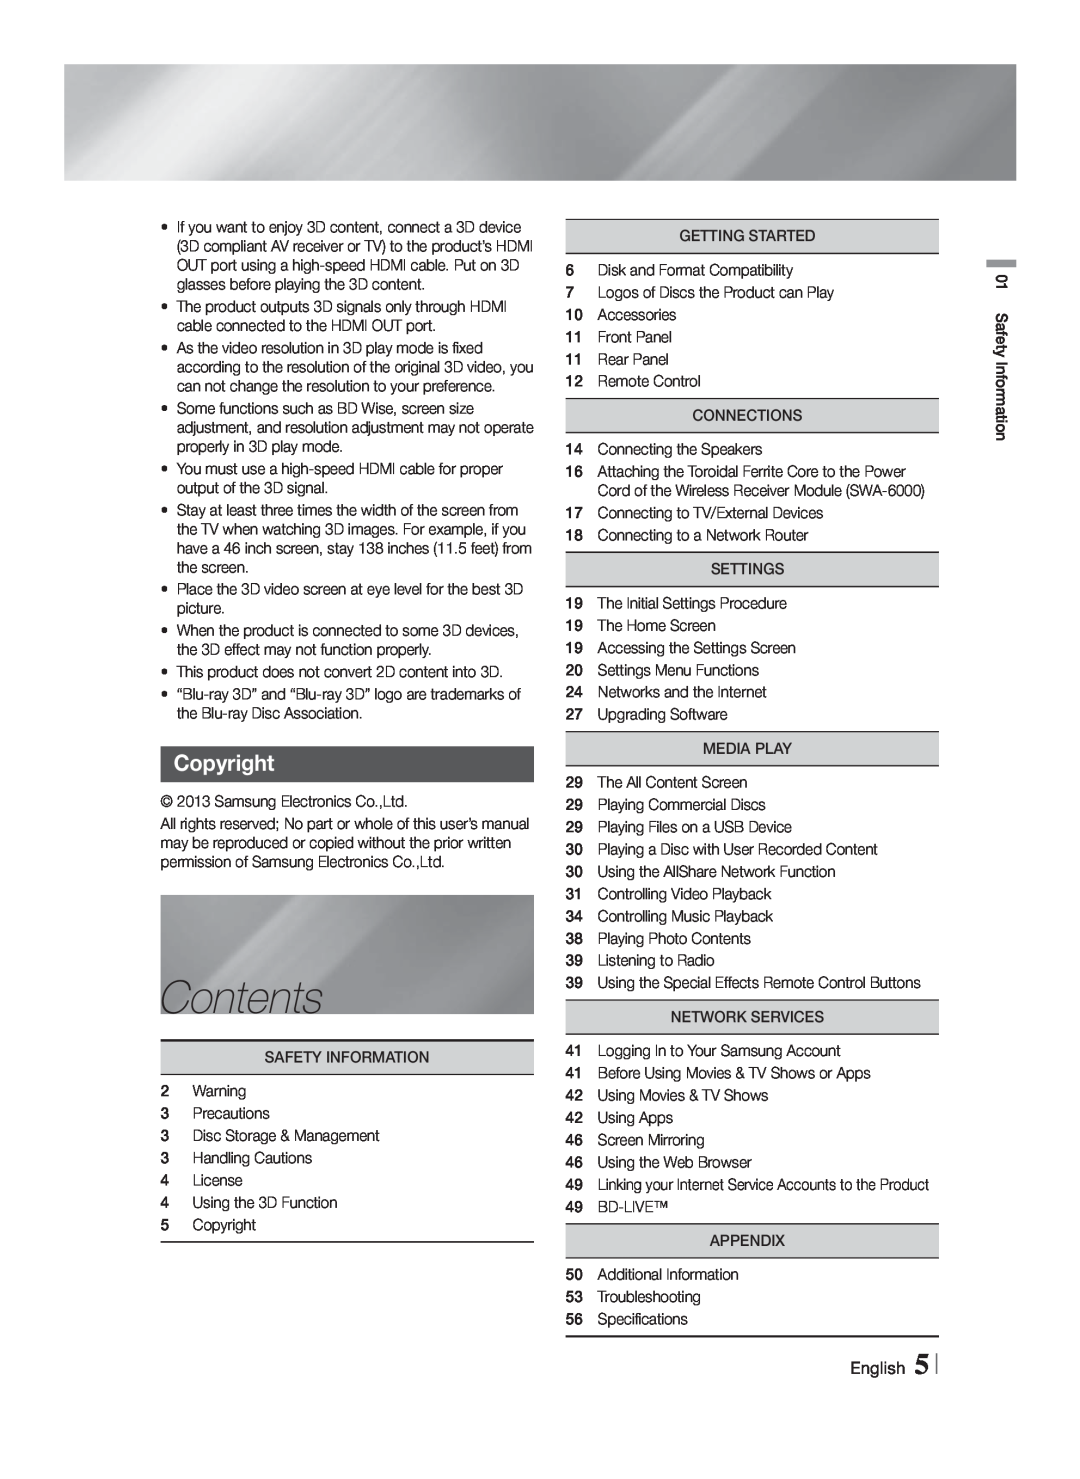 Samsung HTF5500WZA, HT-F5500W user manual Contents, Copyright, English 